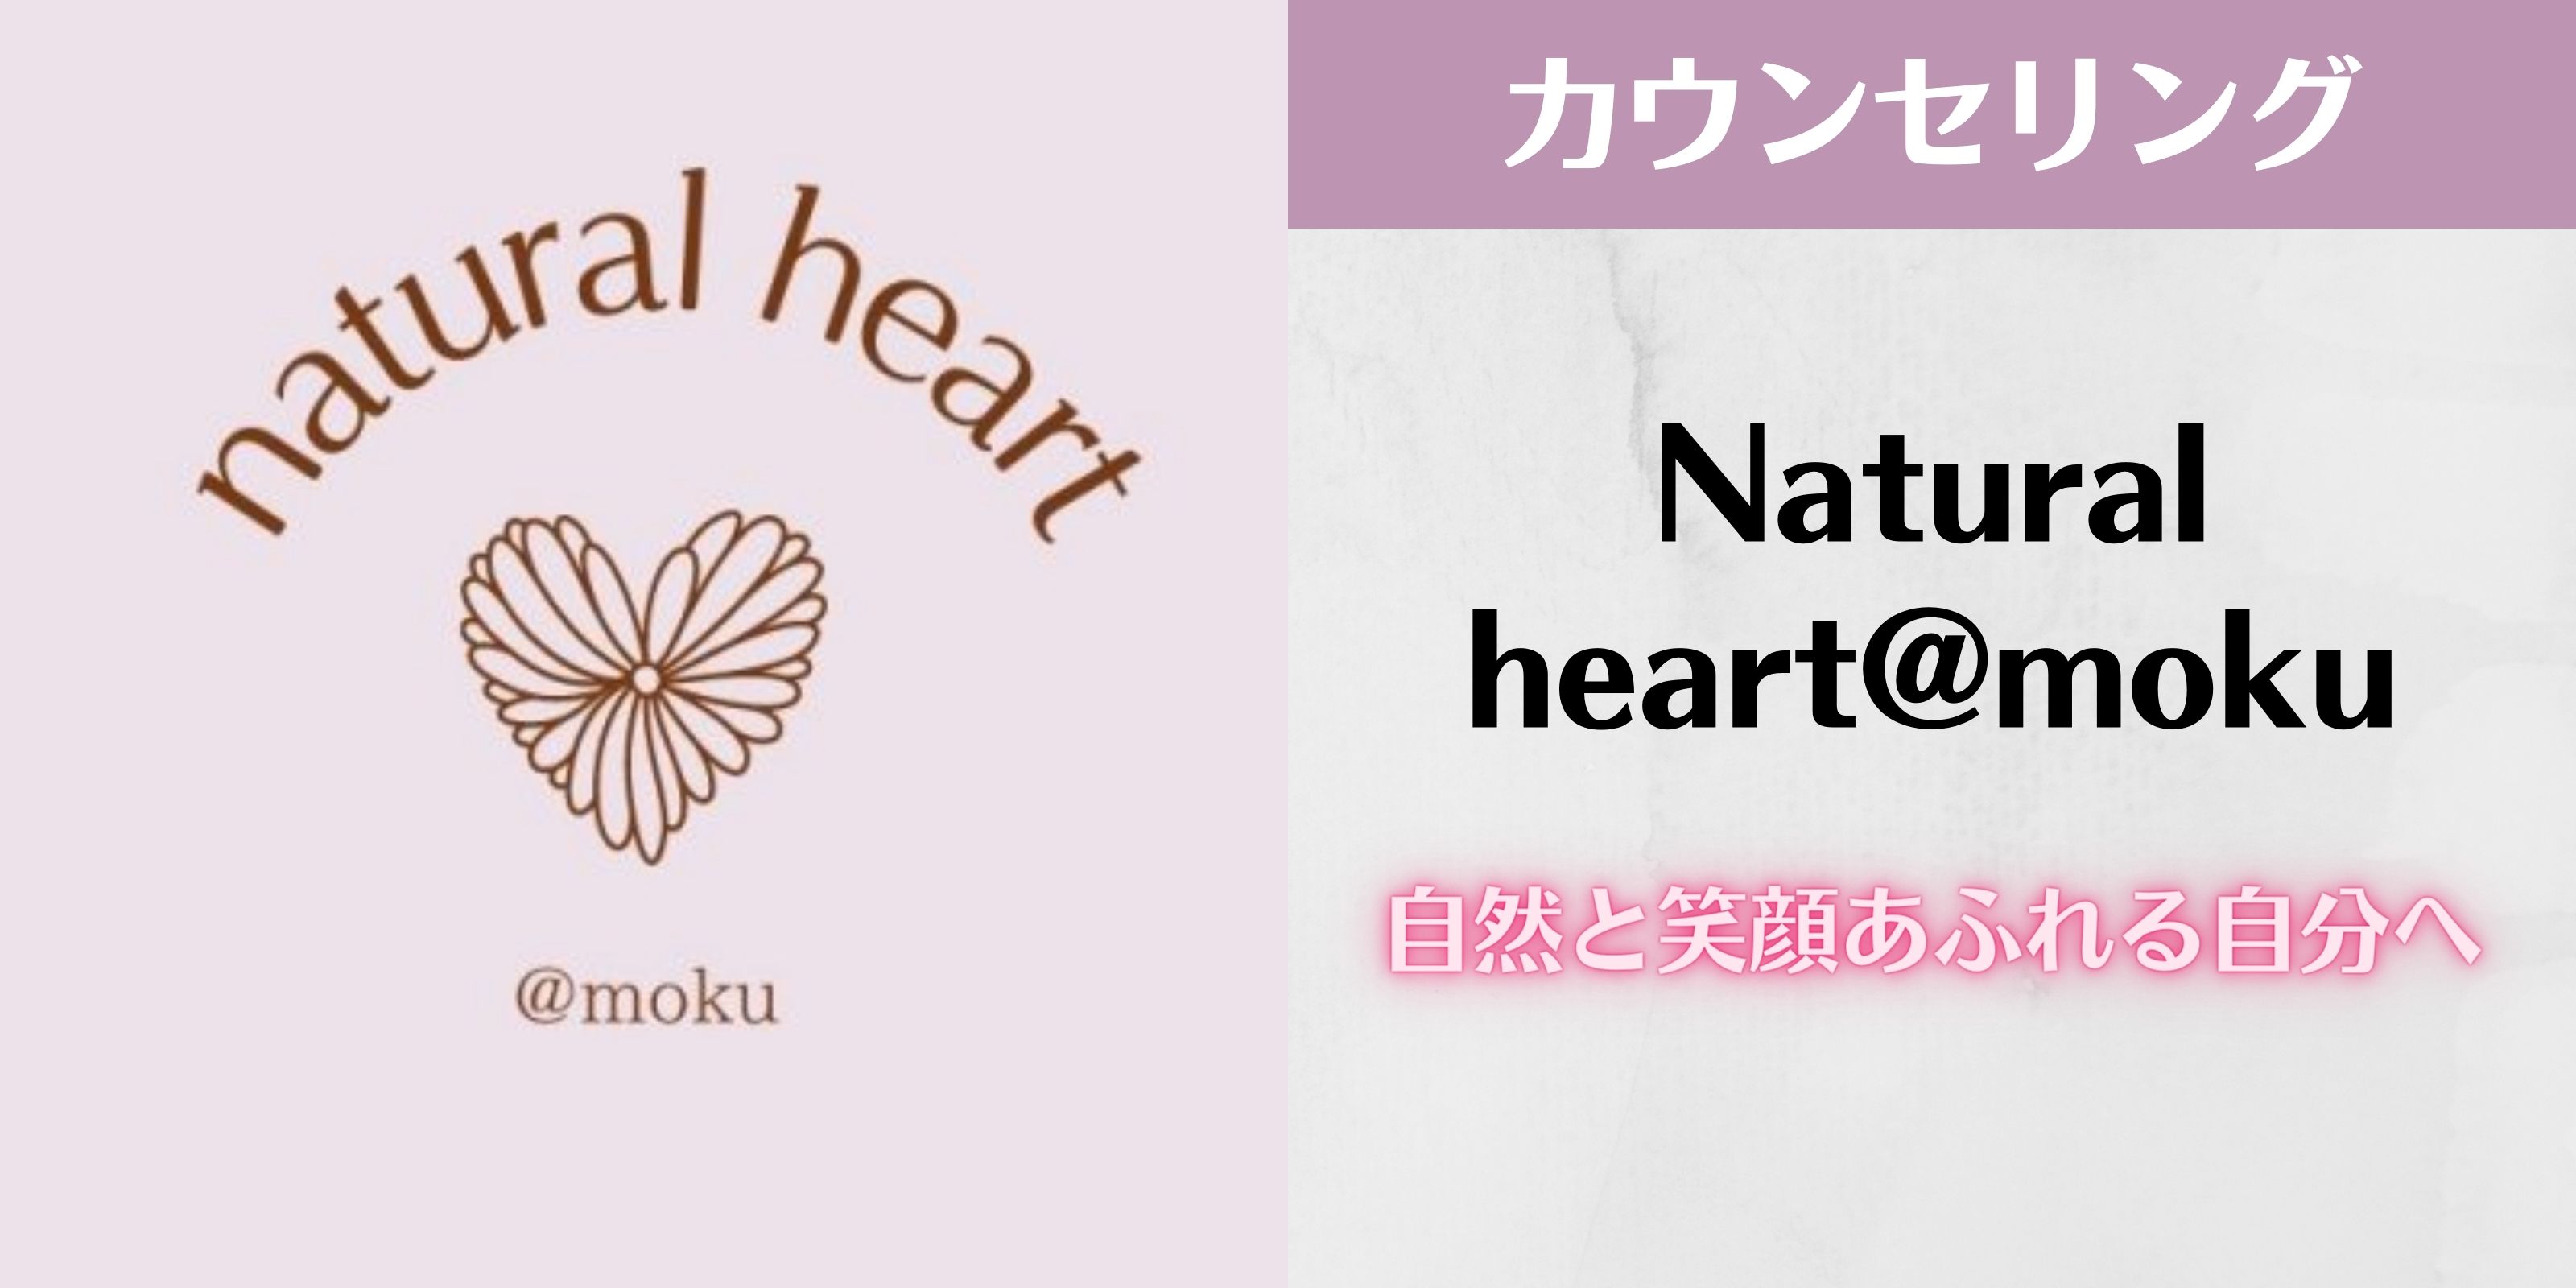 Natural heart@moku (ナチュラルハートモク) 自然と笑顔あふれる自分へ